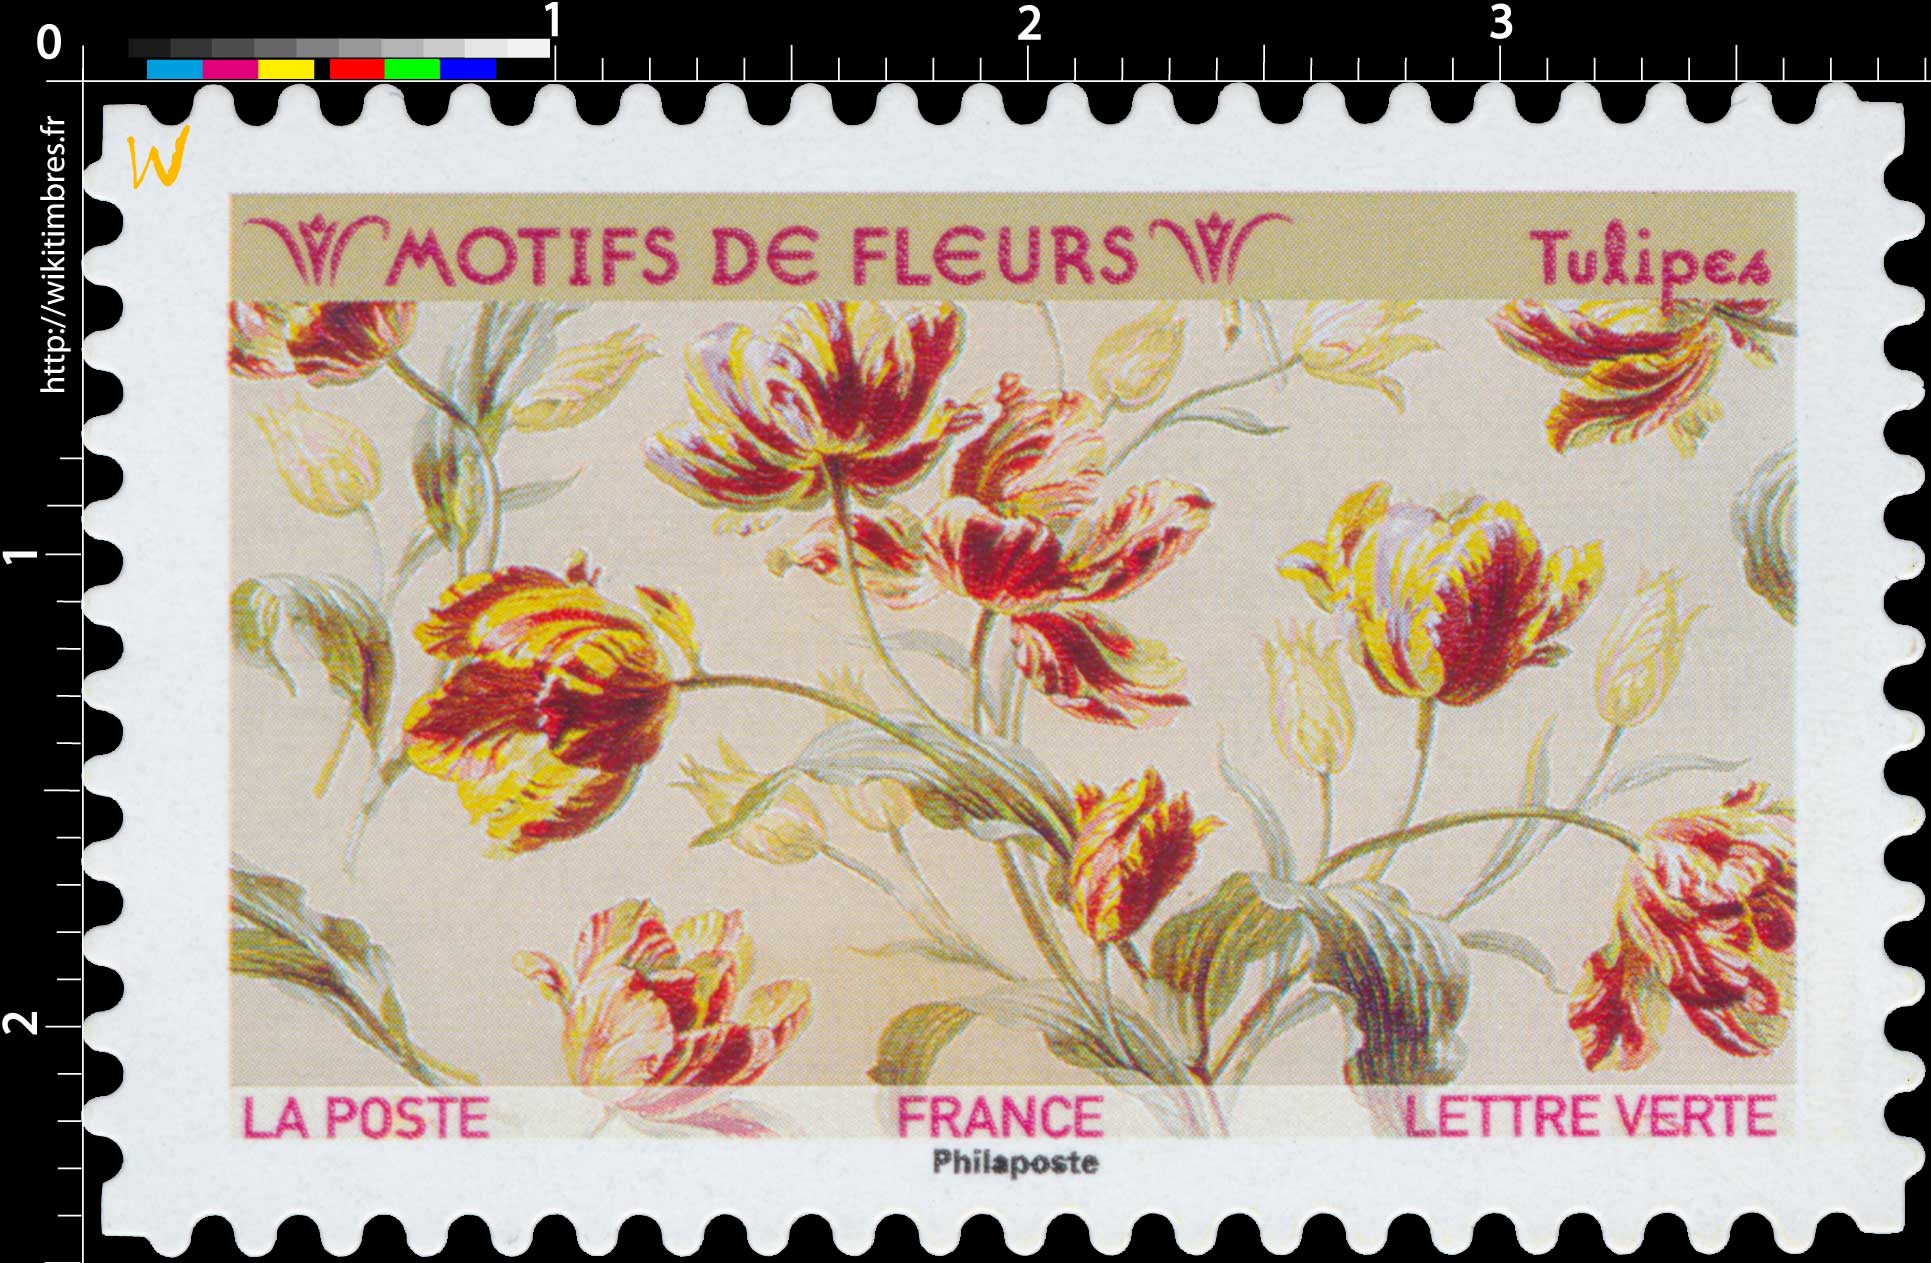 2021 Motifs de fleurs - Tulipes